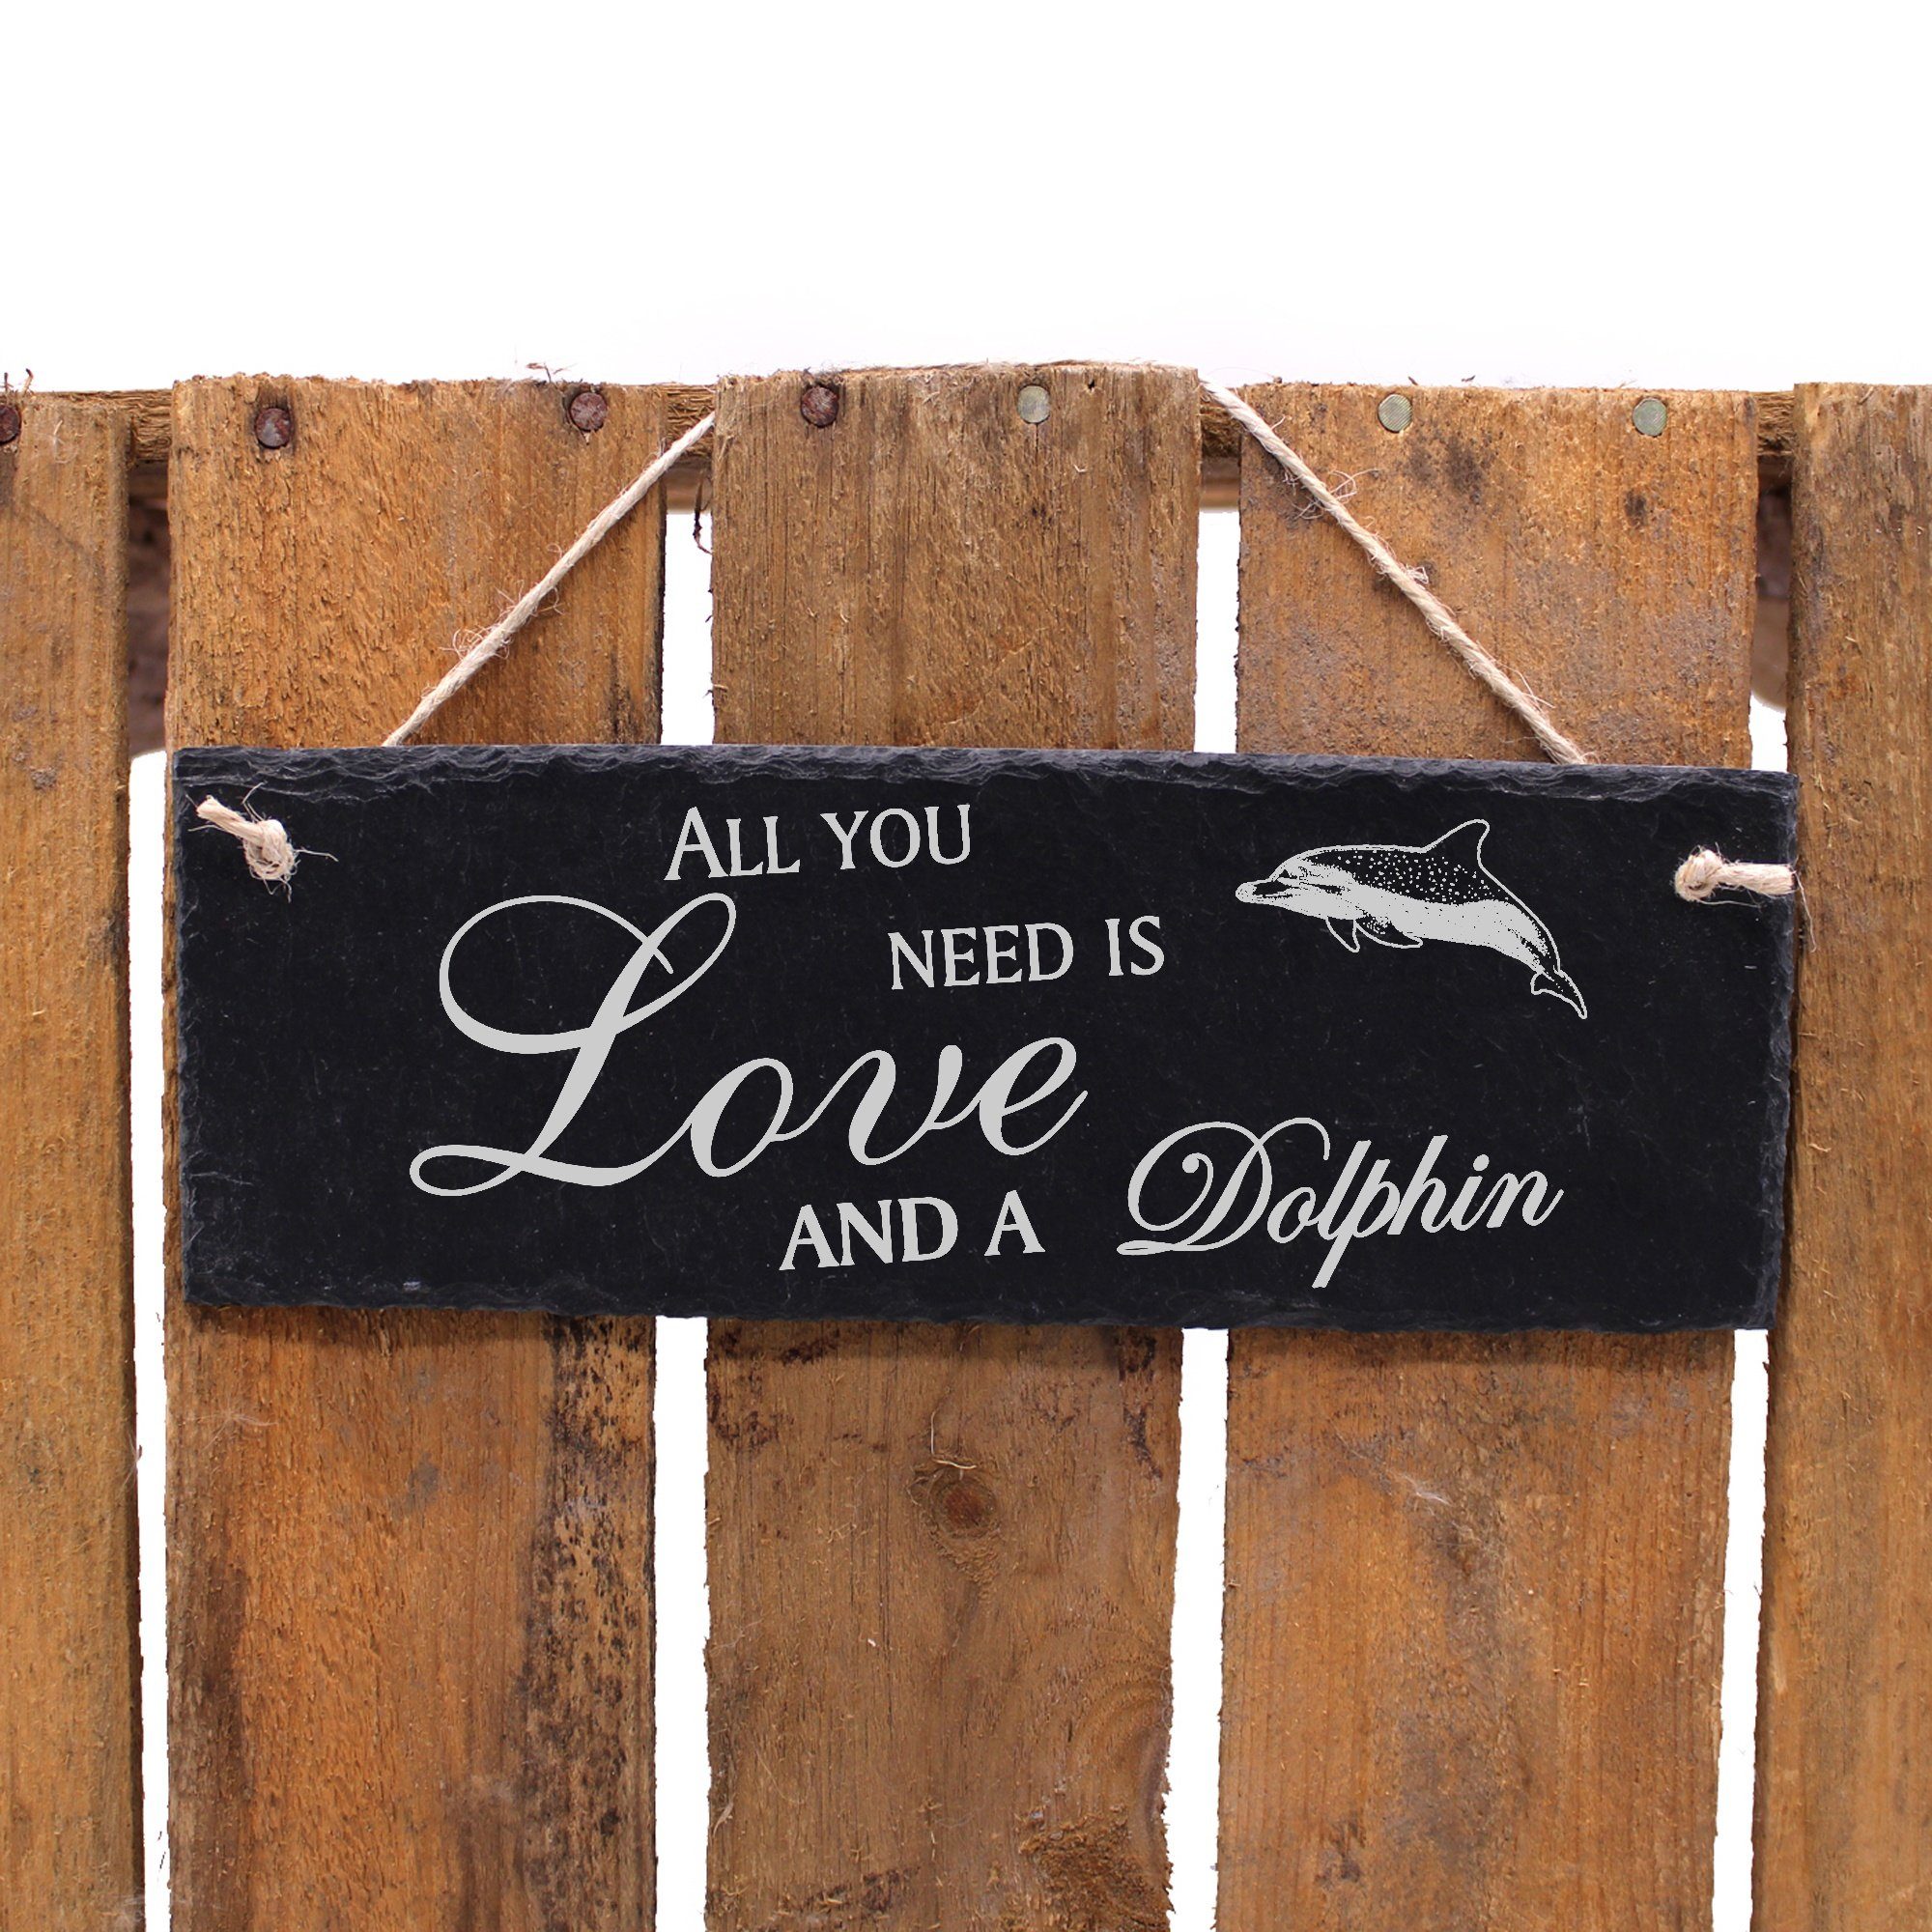 Dekolando Hängedekoration dunkler Delfin 22x8cm you a and is need All Love Dolphin